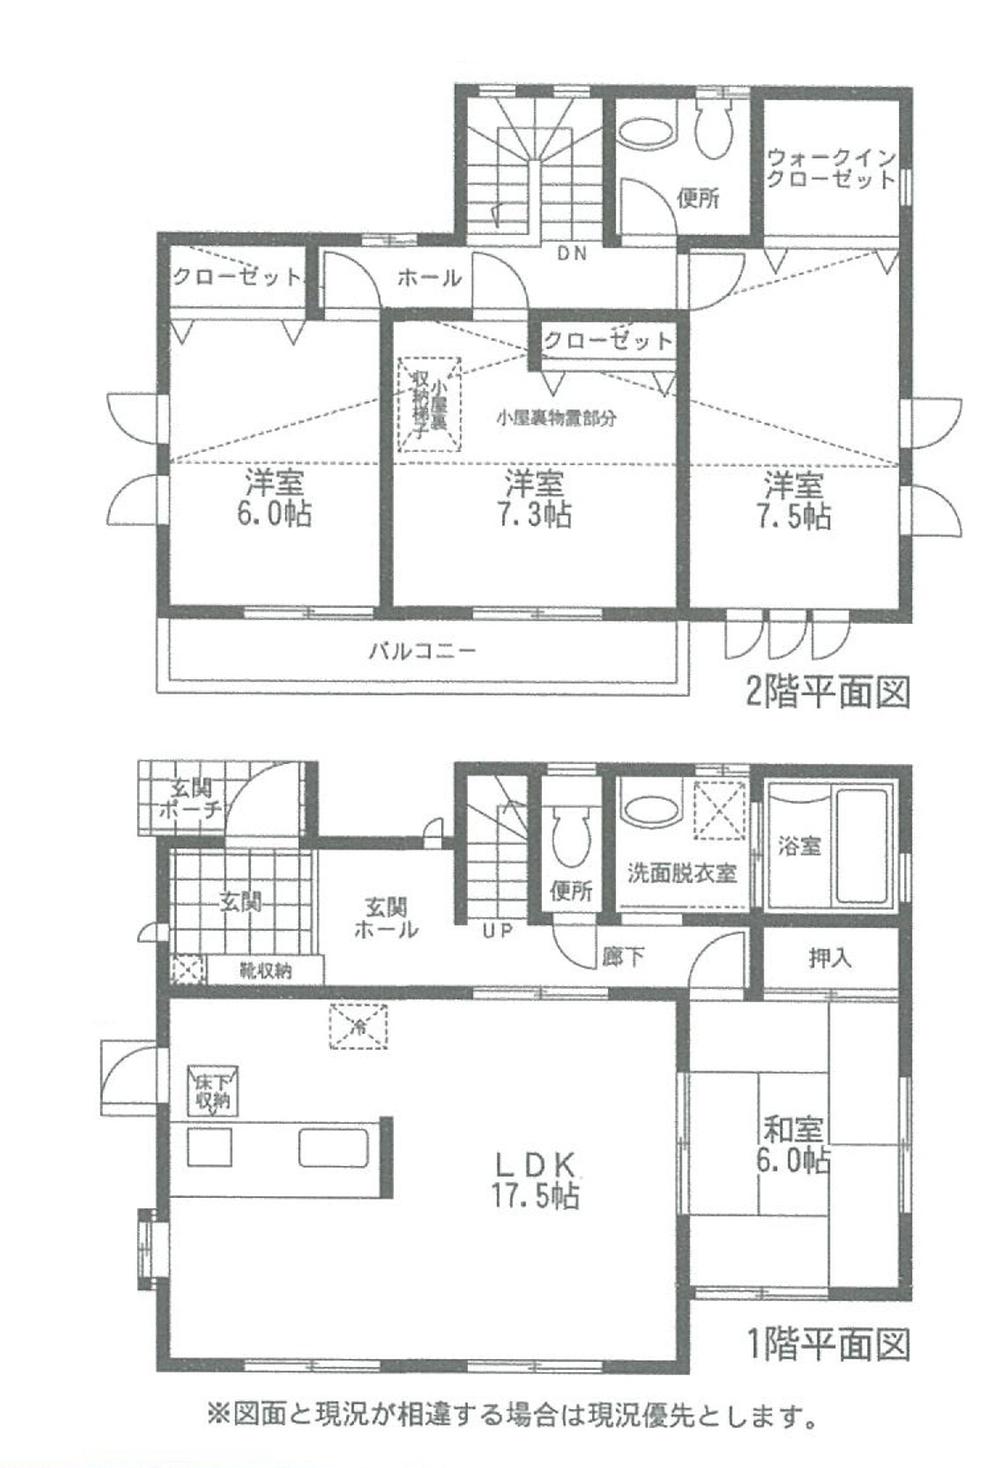 Floor plan. 30 million yen, 4LDK, Land area 280.8 sq m , Building area 111.8 sq m floor plan